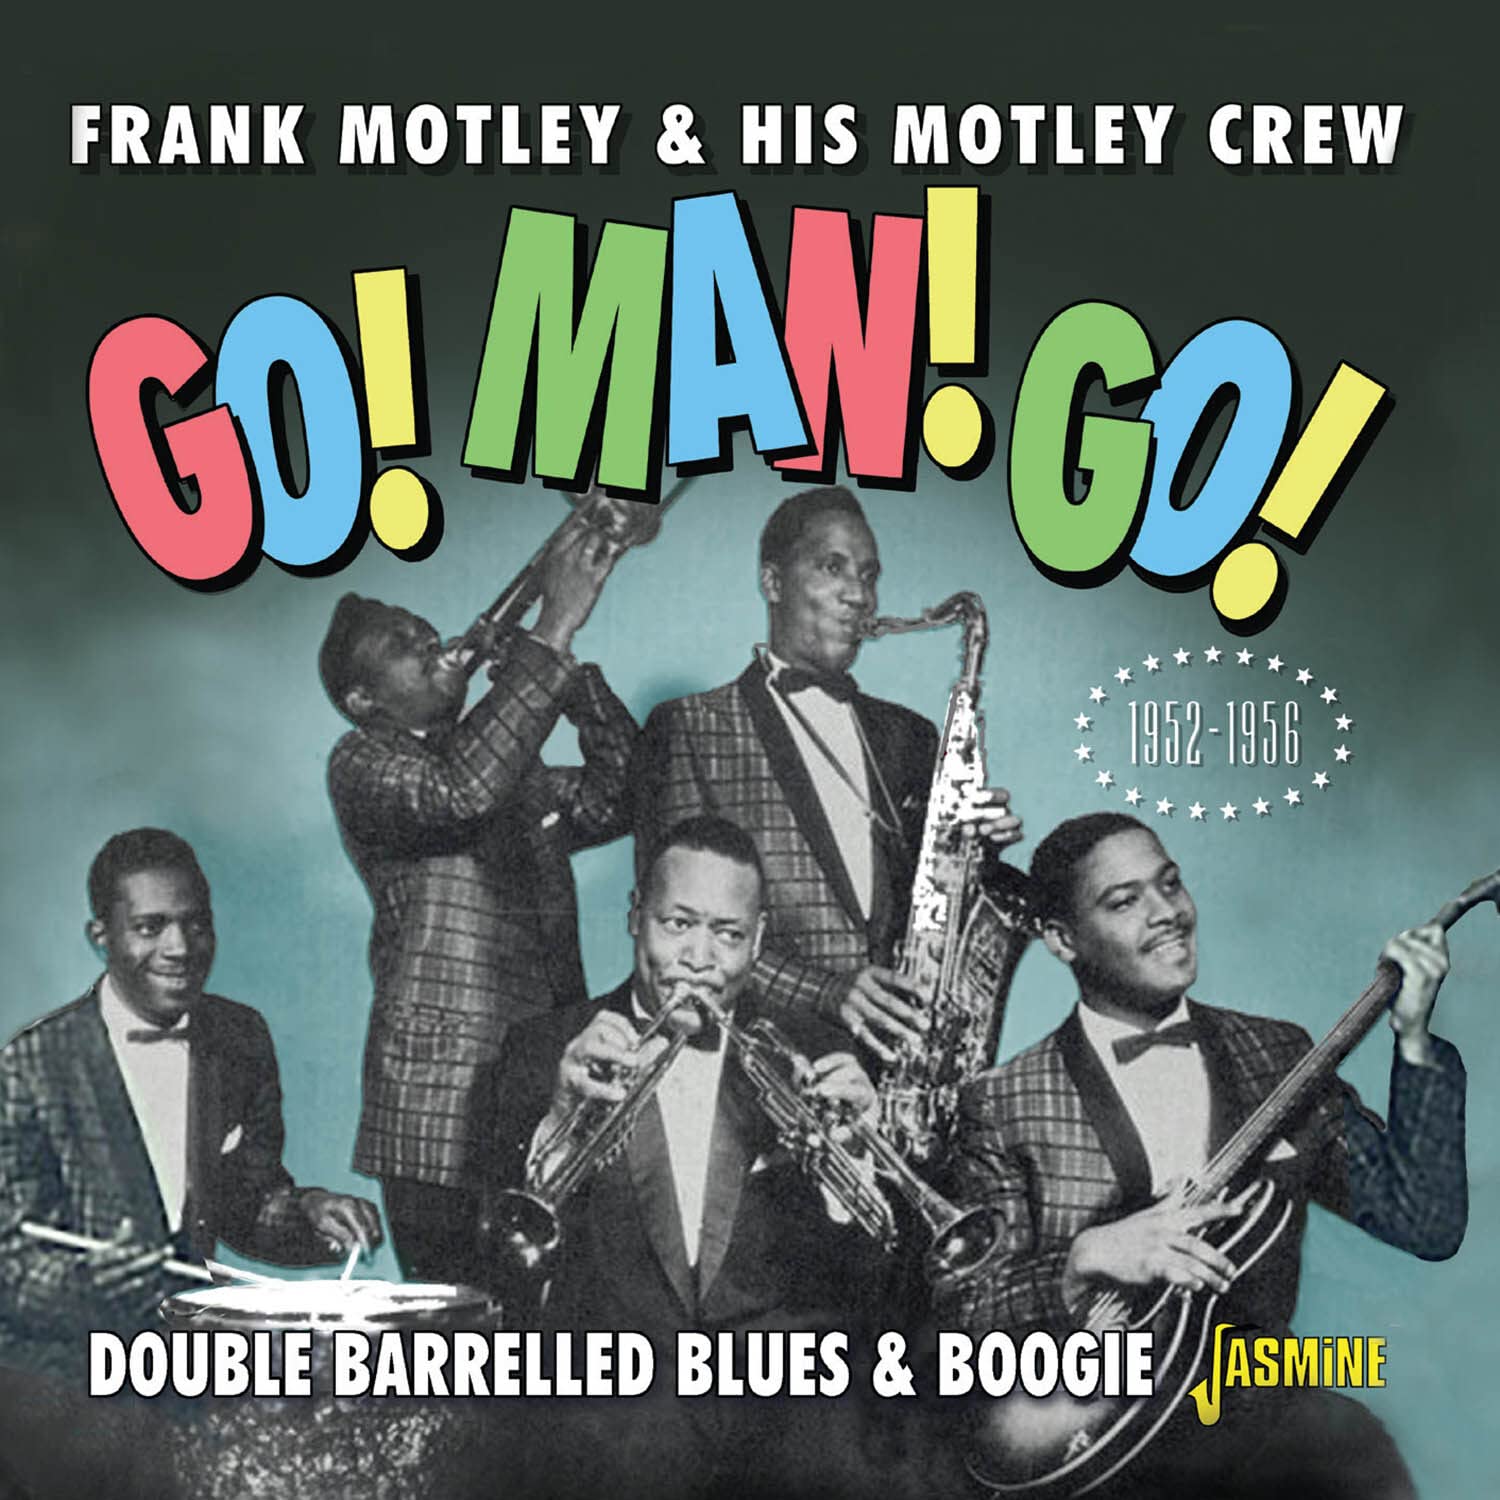 Frank Motley & his Motley Crew - Go! Man! Go! - Double Barreled Blues And Boogie - 1952-1956